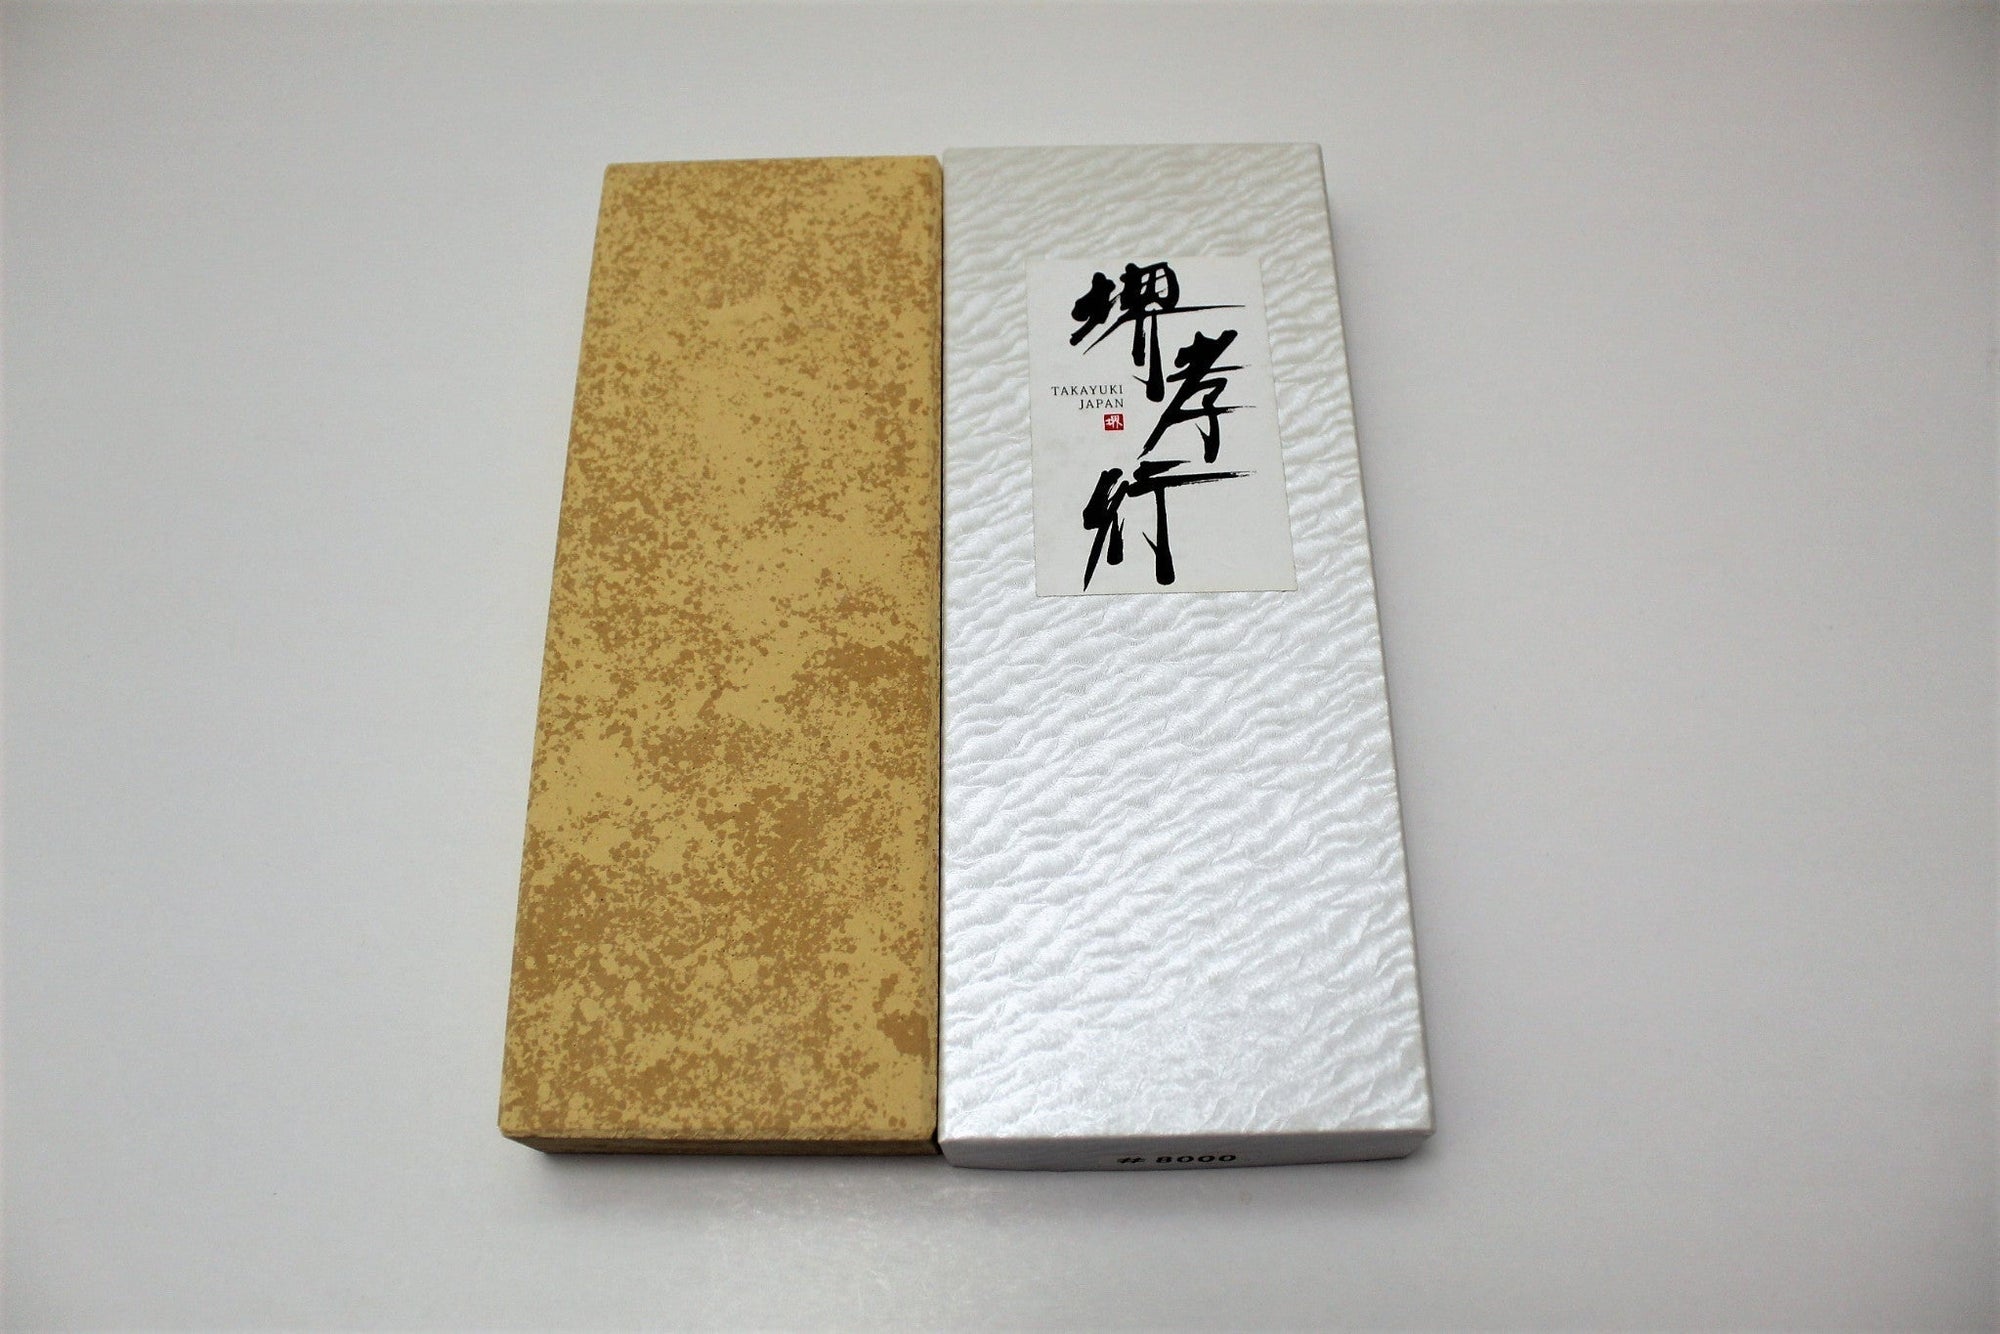 Accessories - Sakai Takayuki Japanese Sharpening Stone - Grit #8000